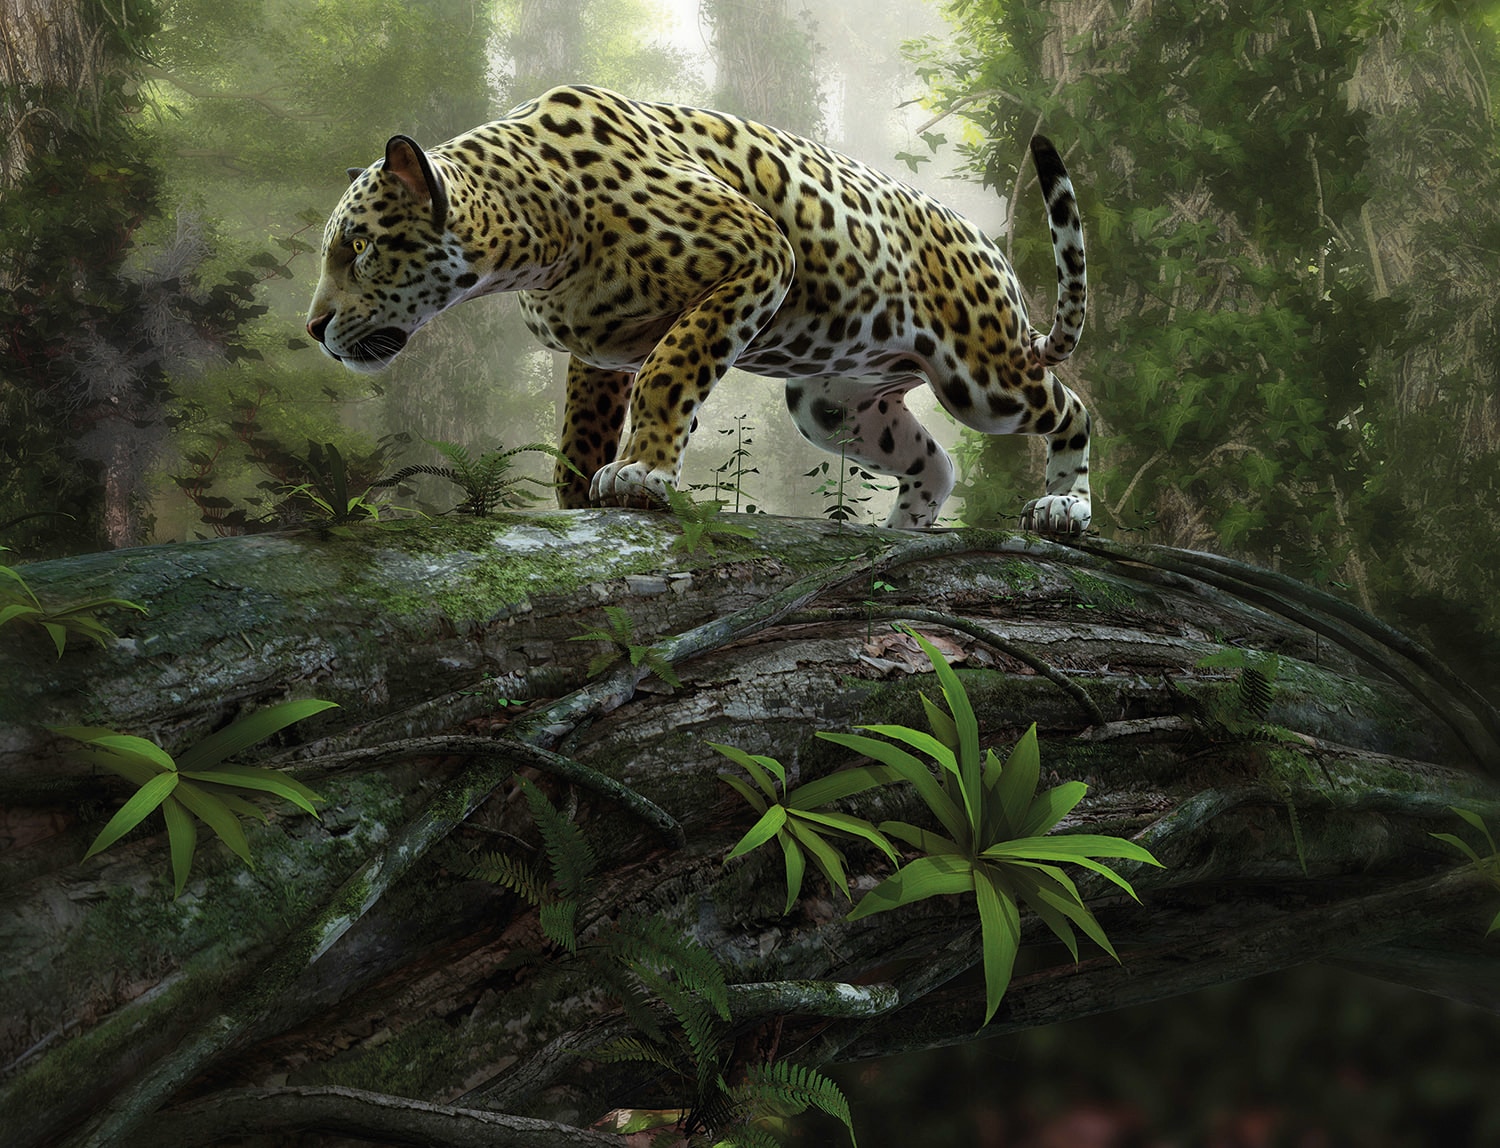 Papermoon Fototapete »Jaguar on the Prowl«